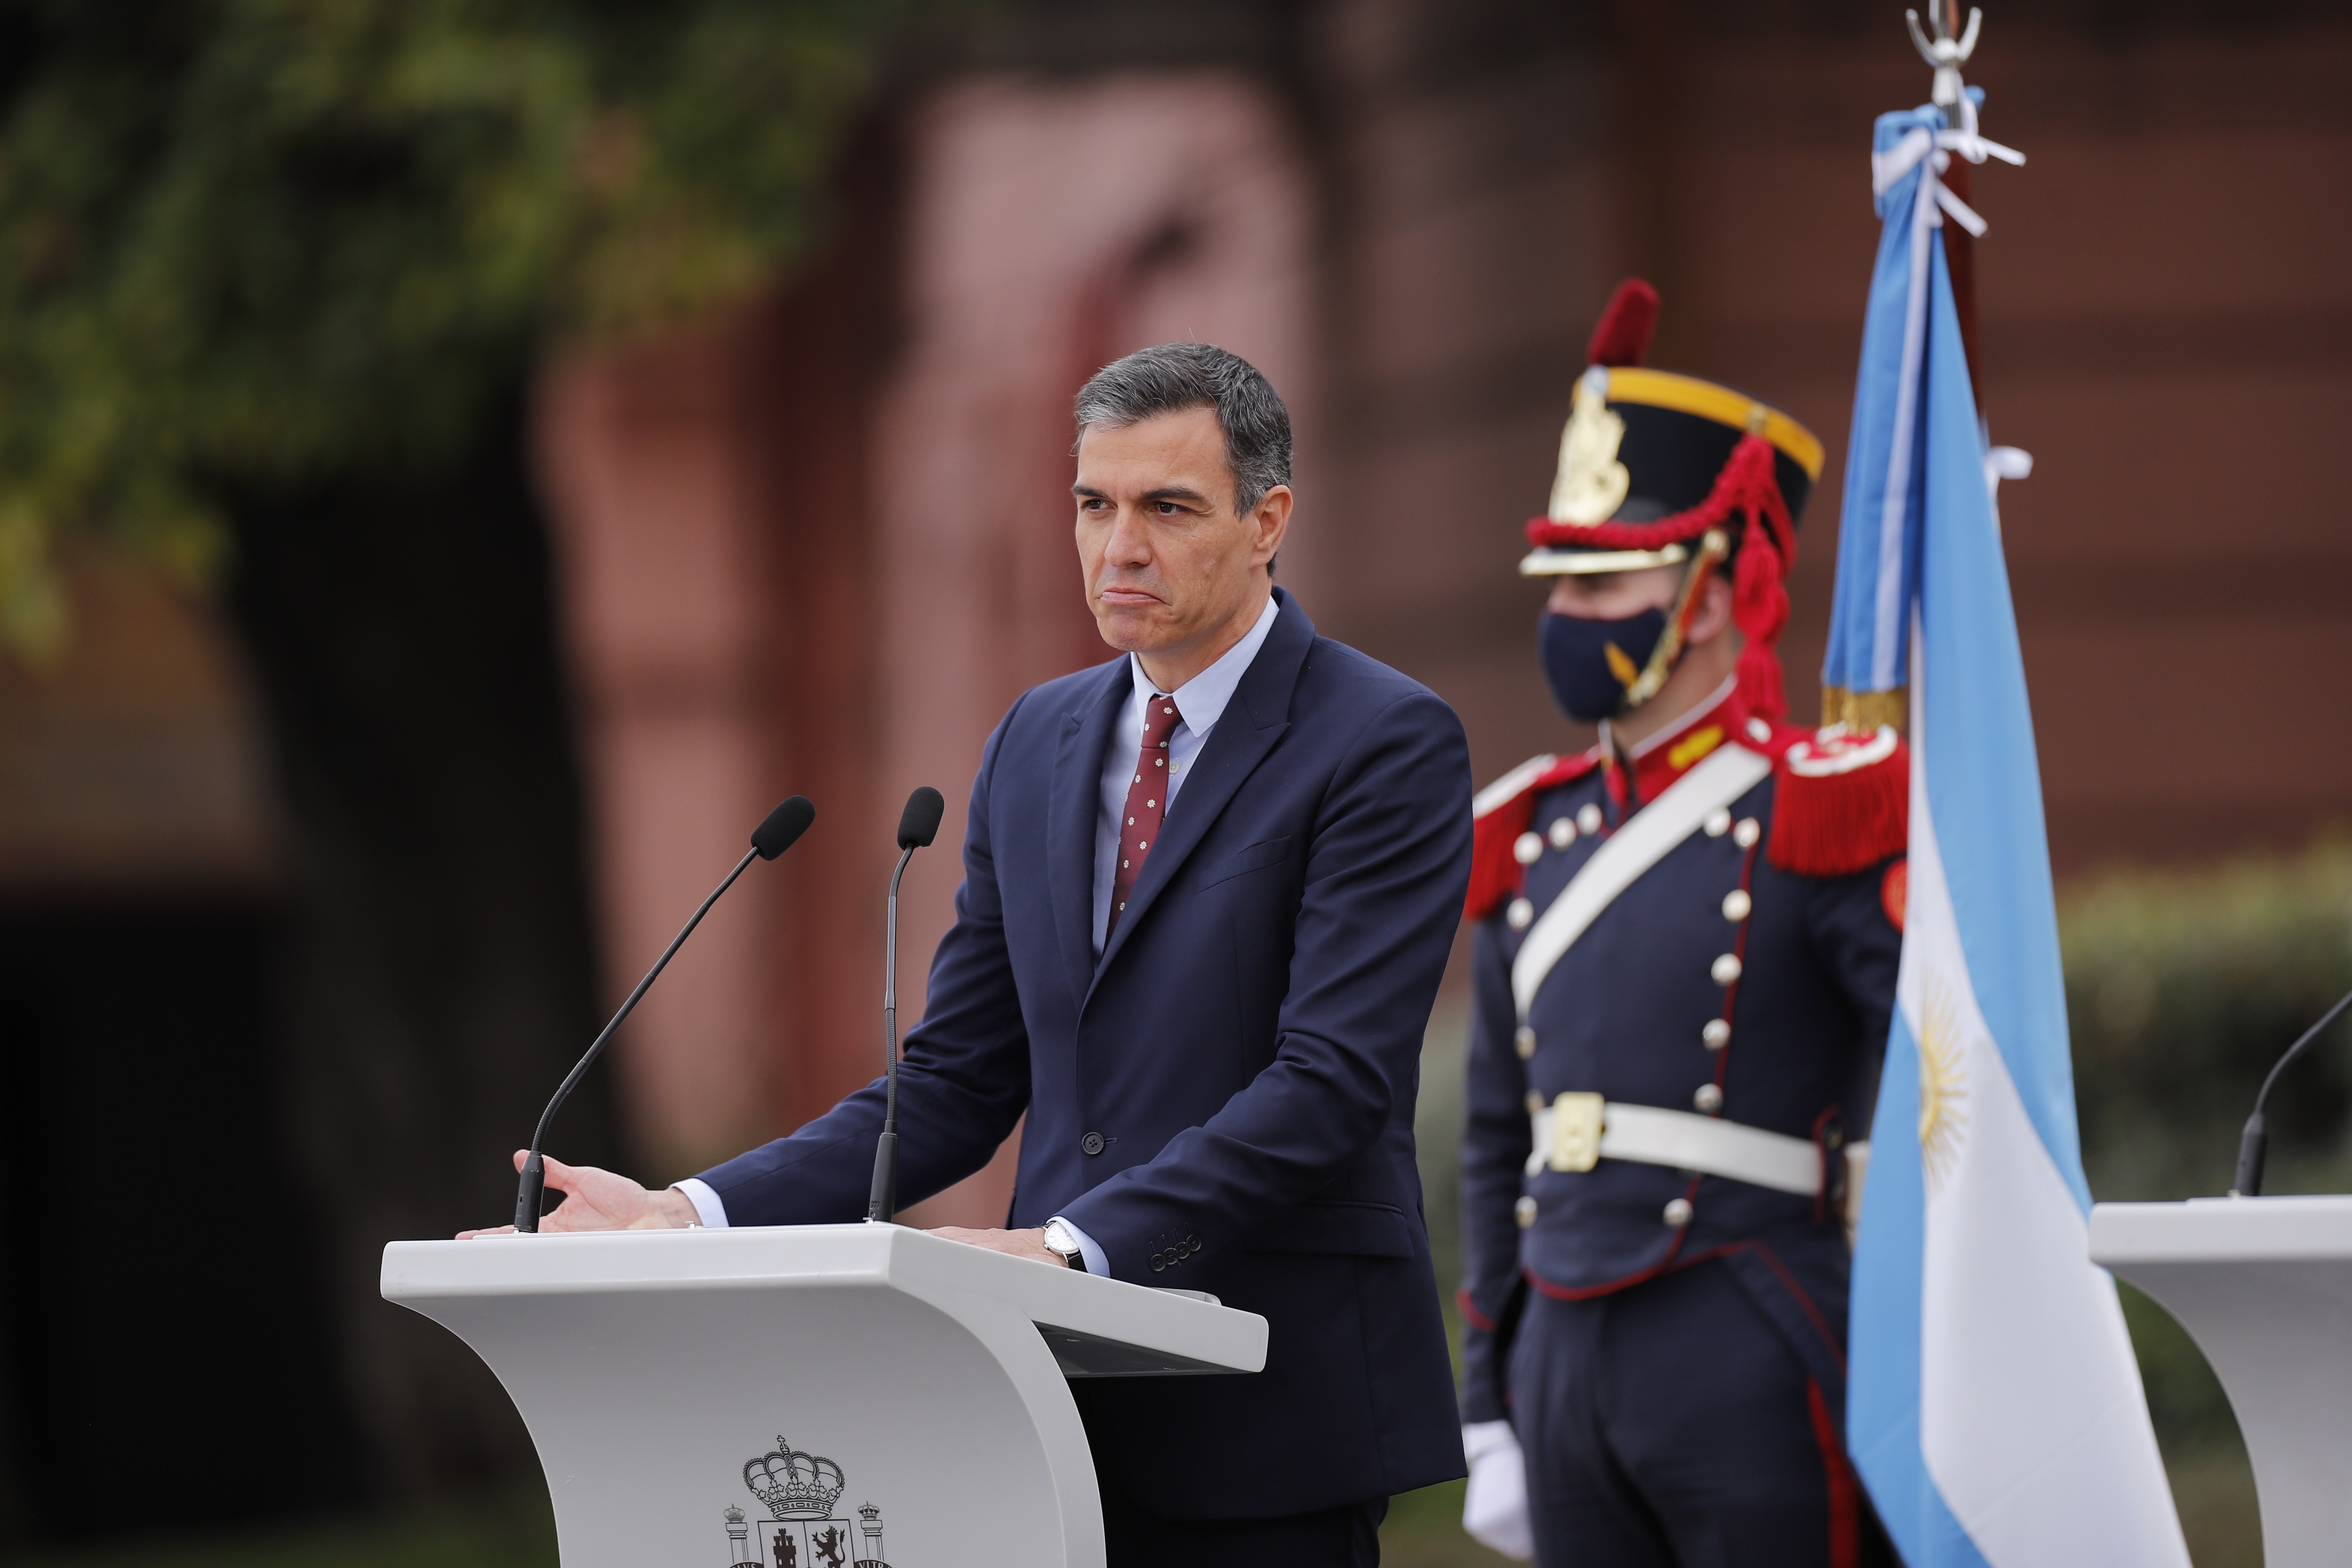 Sánchez asks for "understanding and magnanimity" over the prisoner pardons